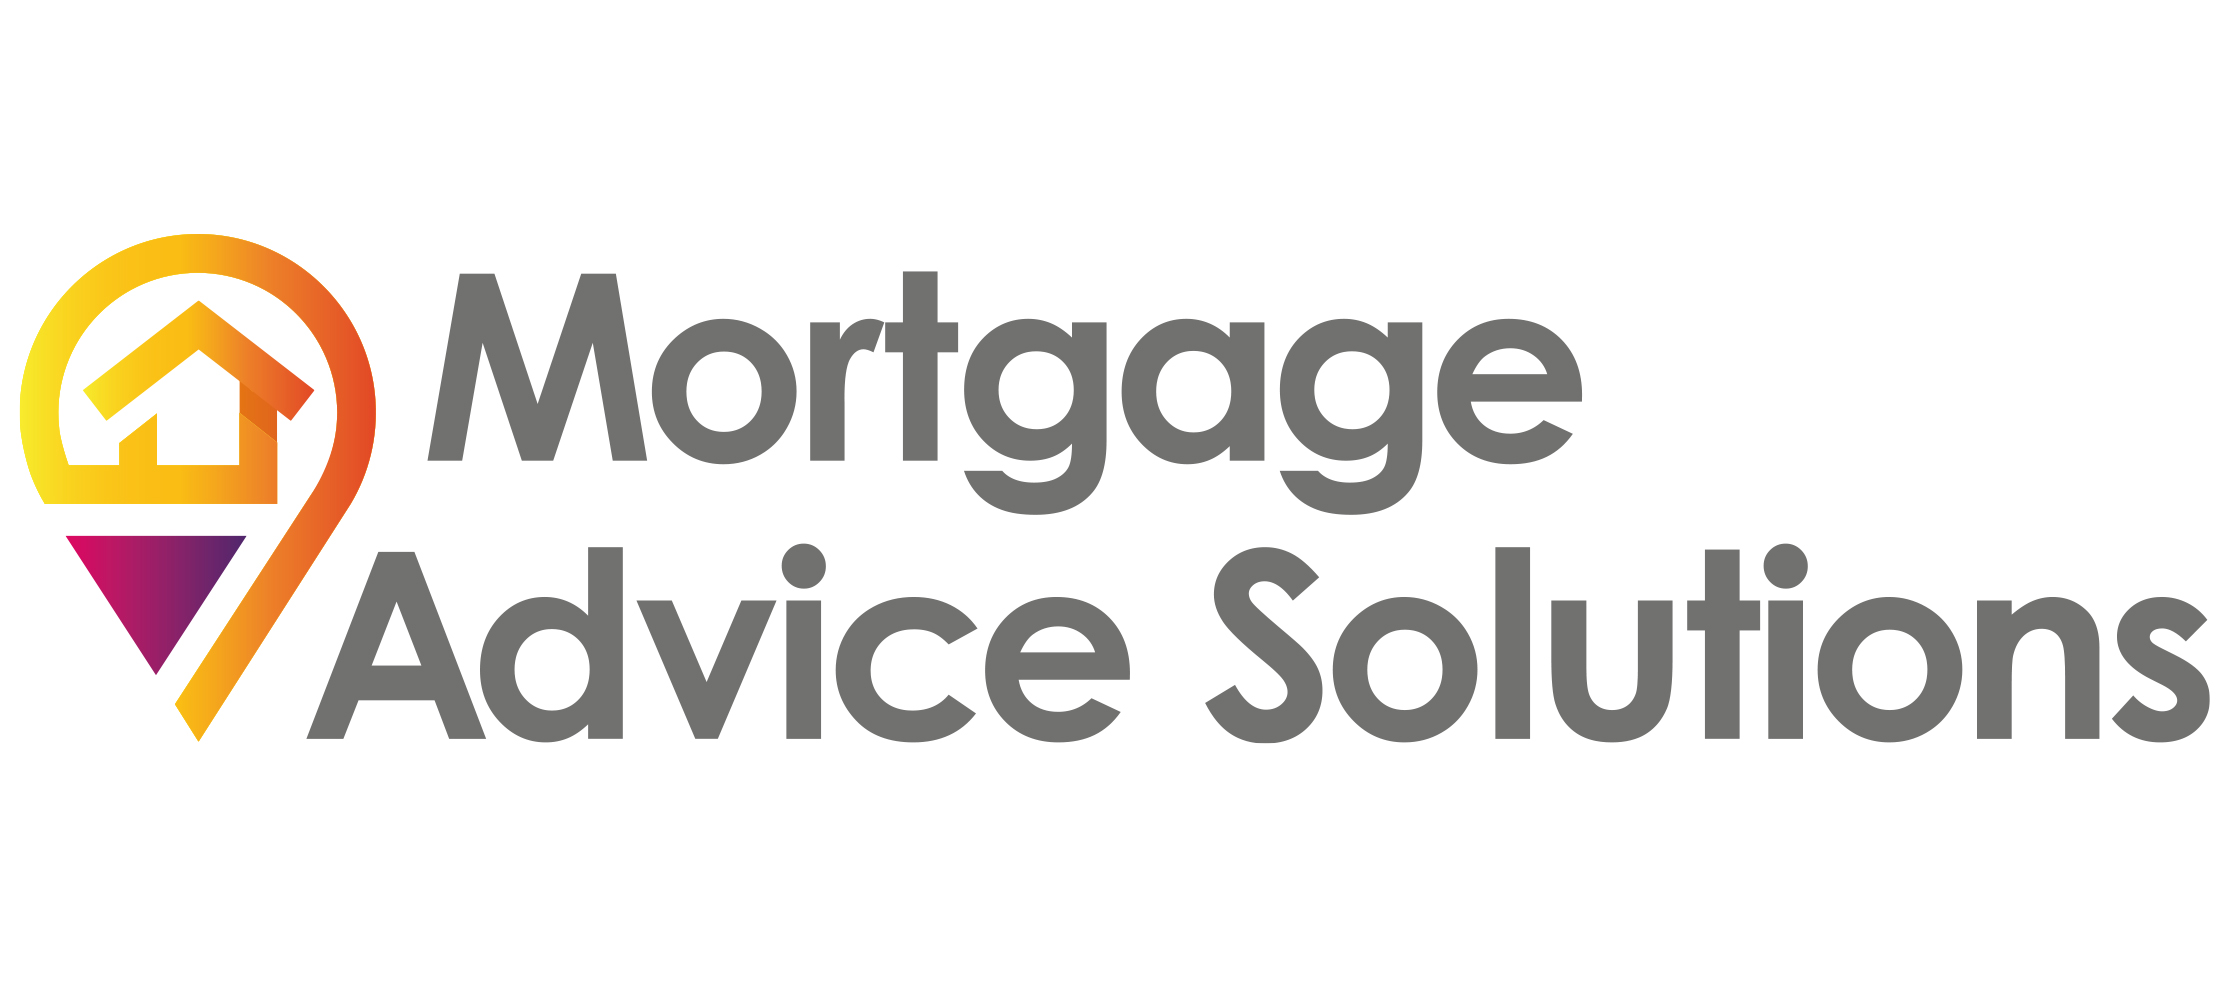 Mortgage Advice Solutions Logo